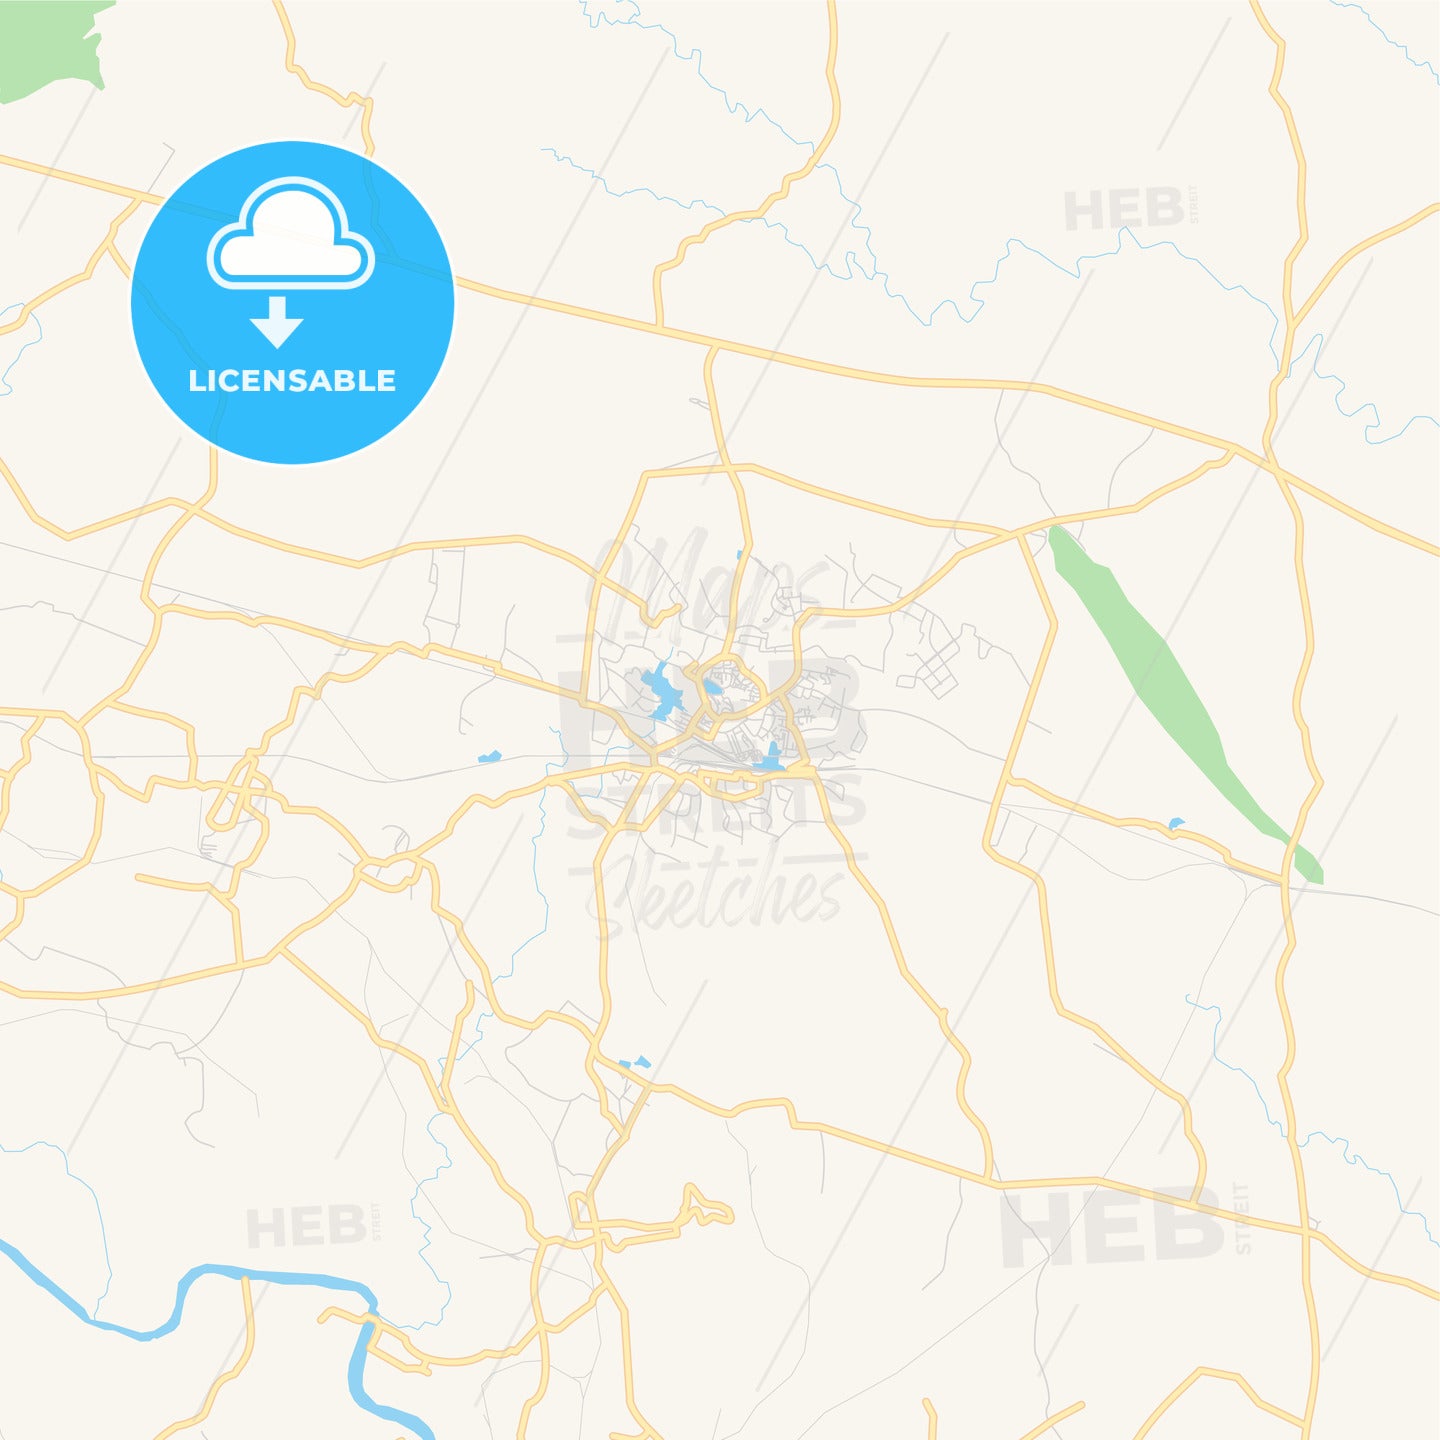 Printable street map of Dhanbad, India